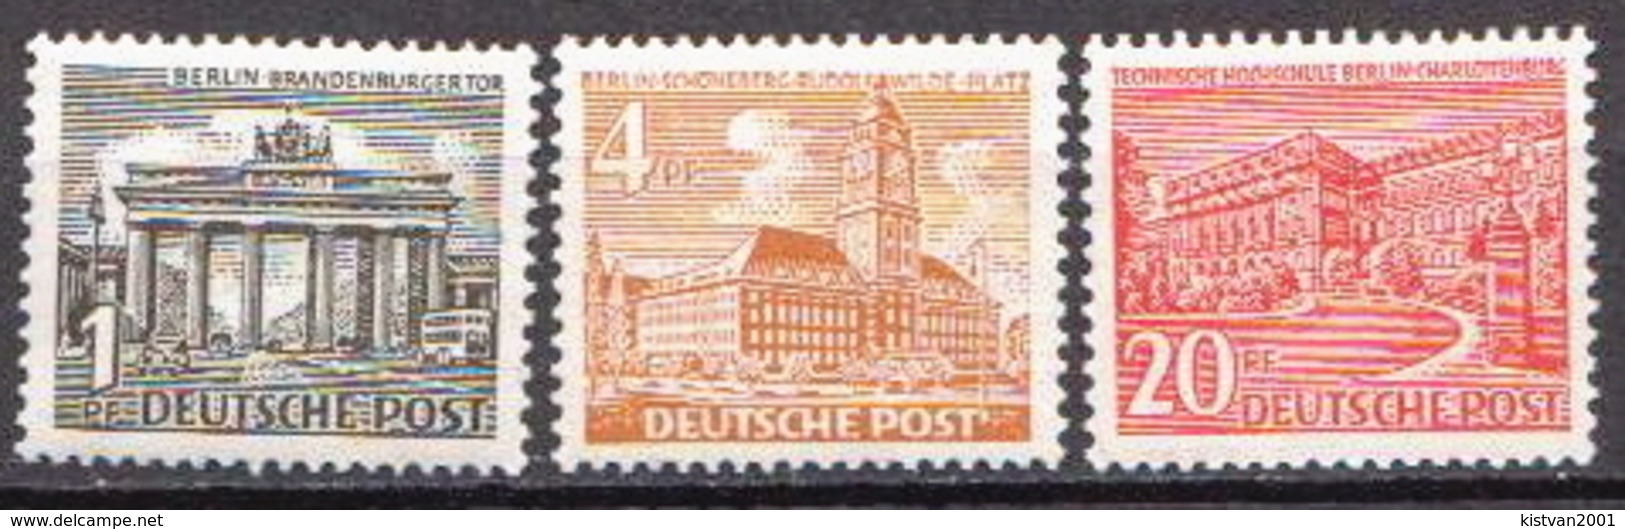 Germany / Berlin MNH Stamps - Ungebraucht